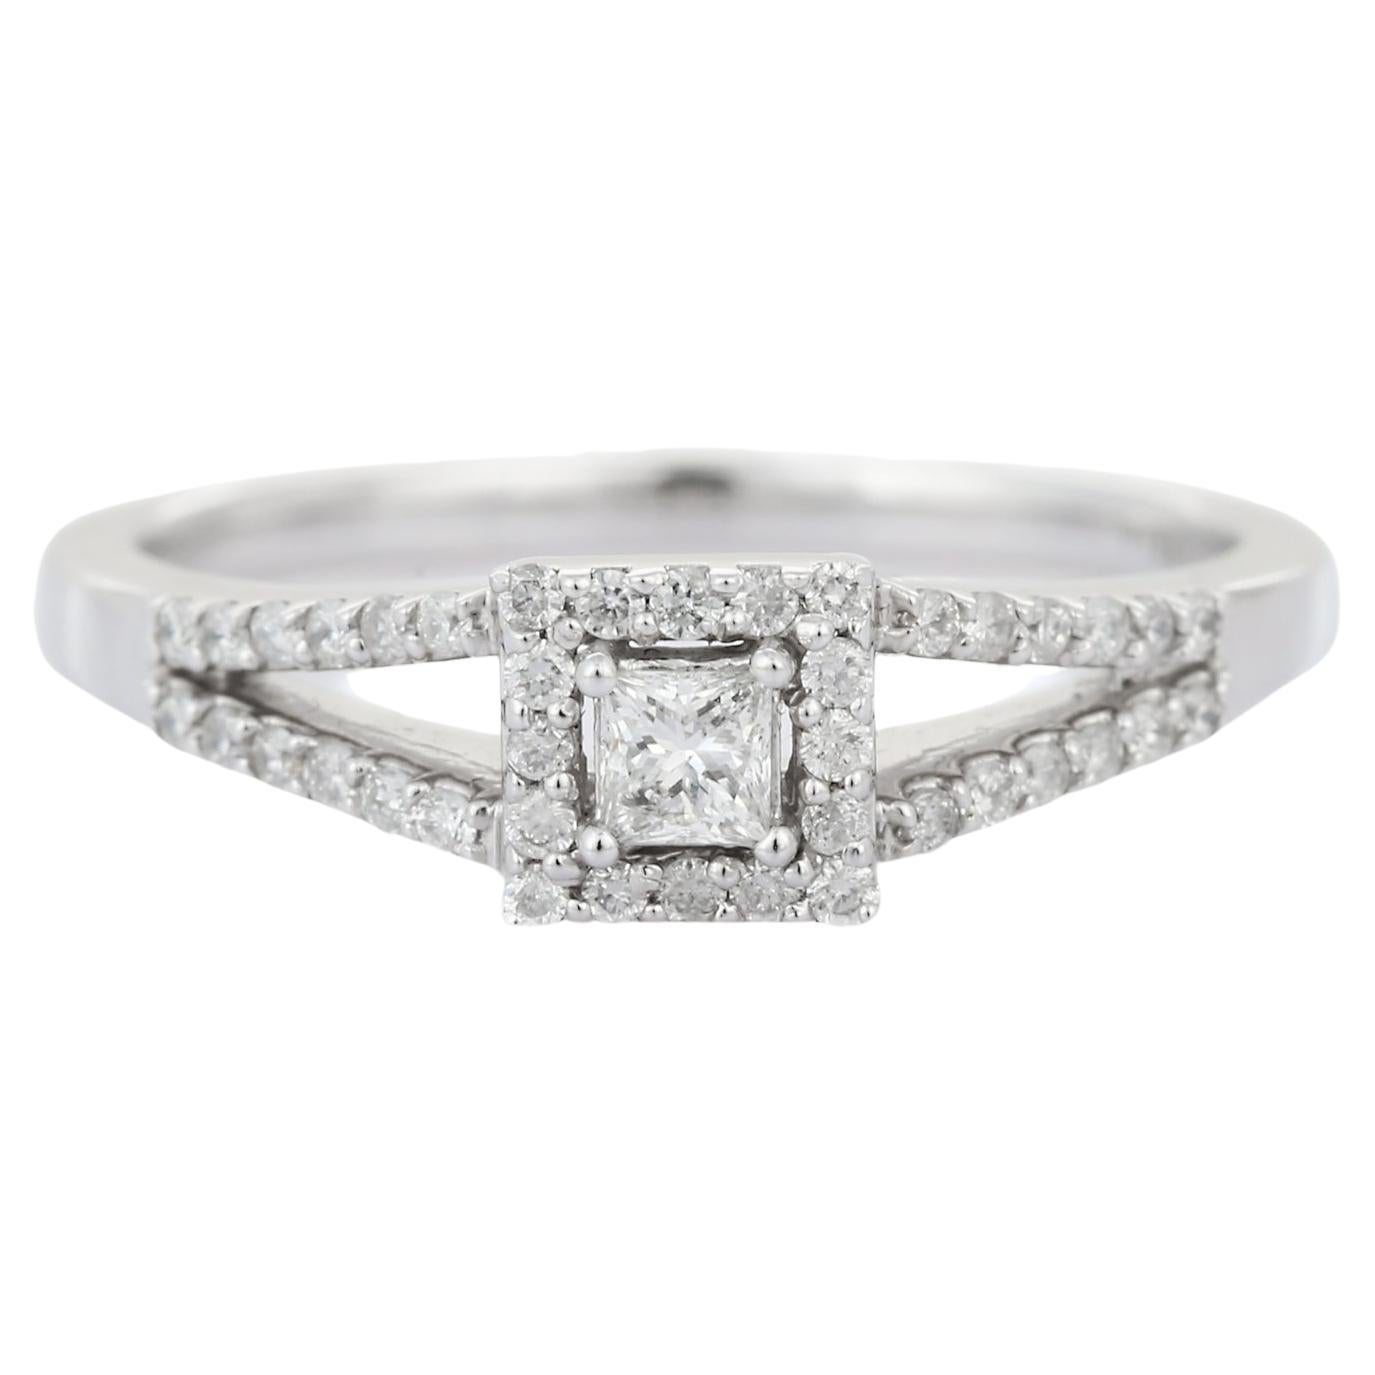 18K White Gold Certified Diamond Engagement Ring